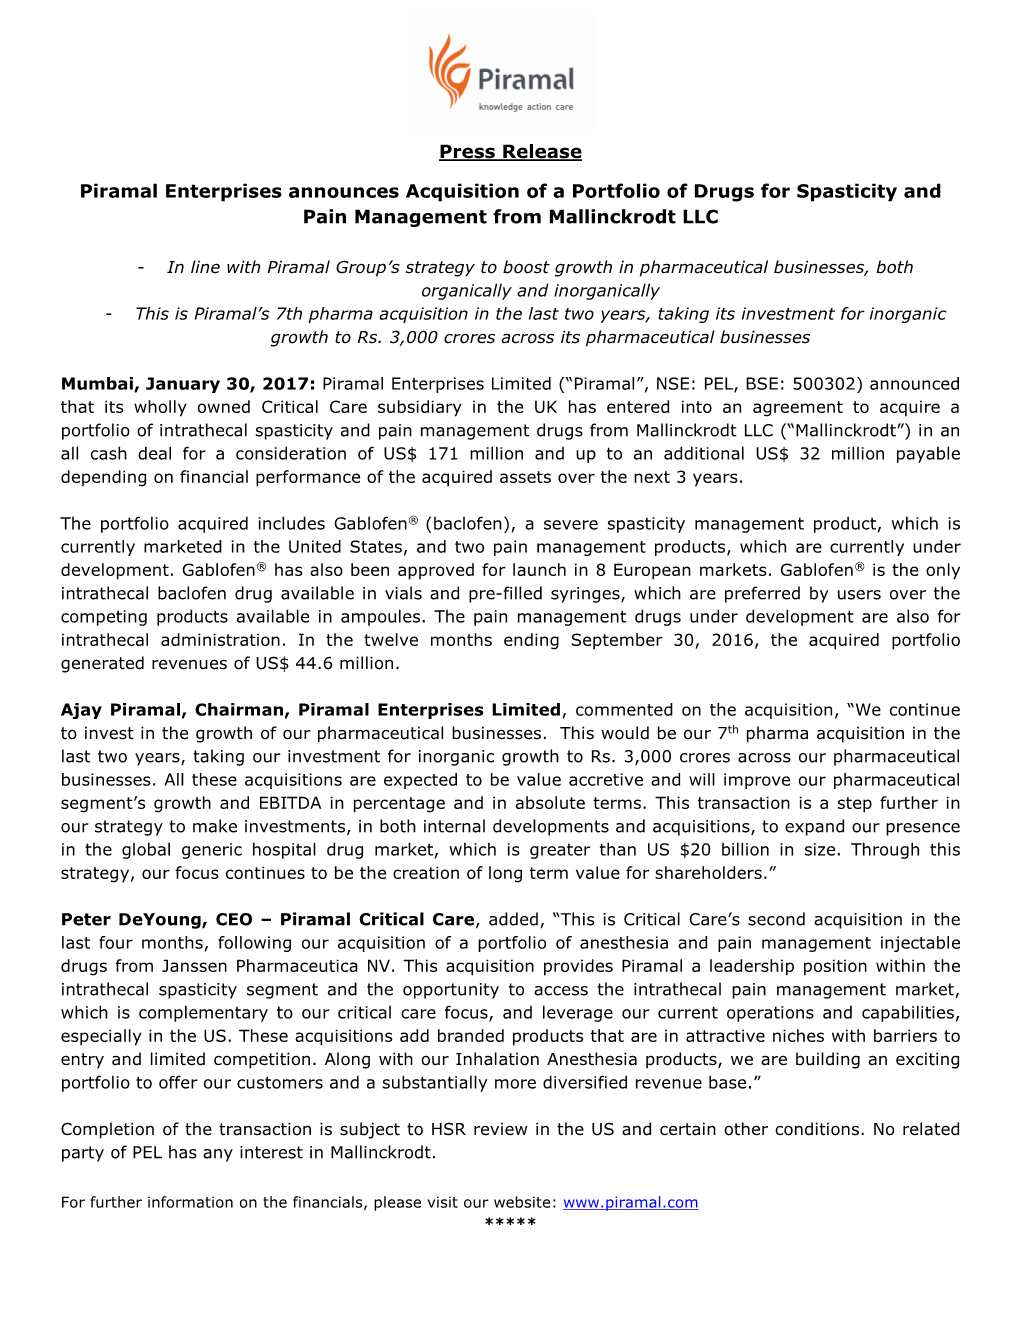 Piramal Enterprises Announces Acquisition of a Portfolio of Drugs for Spasticity and Pain Management from Mallinckrodt LLC